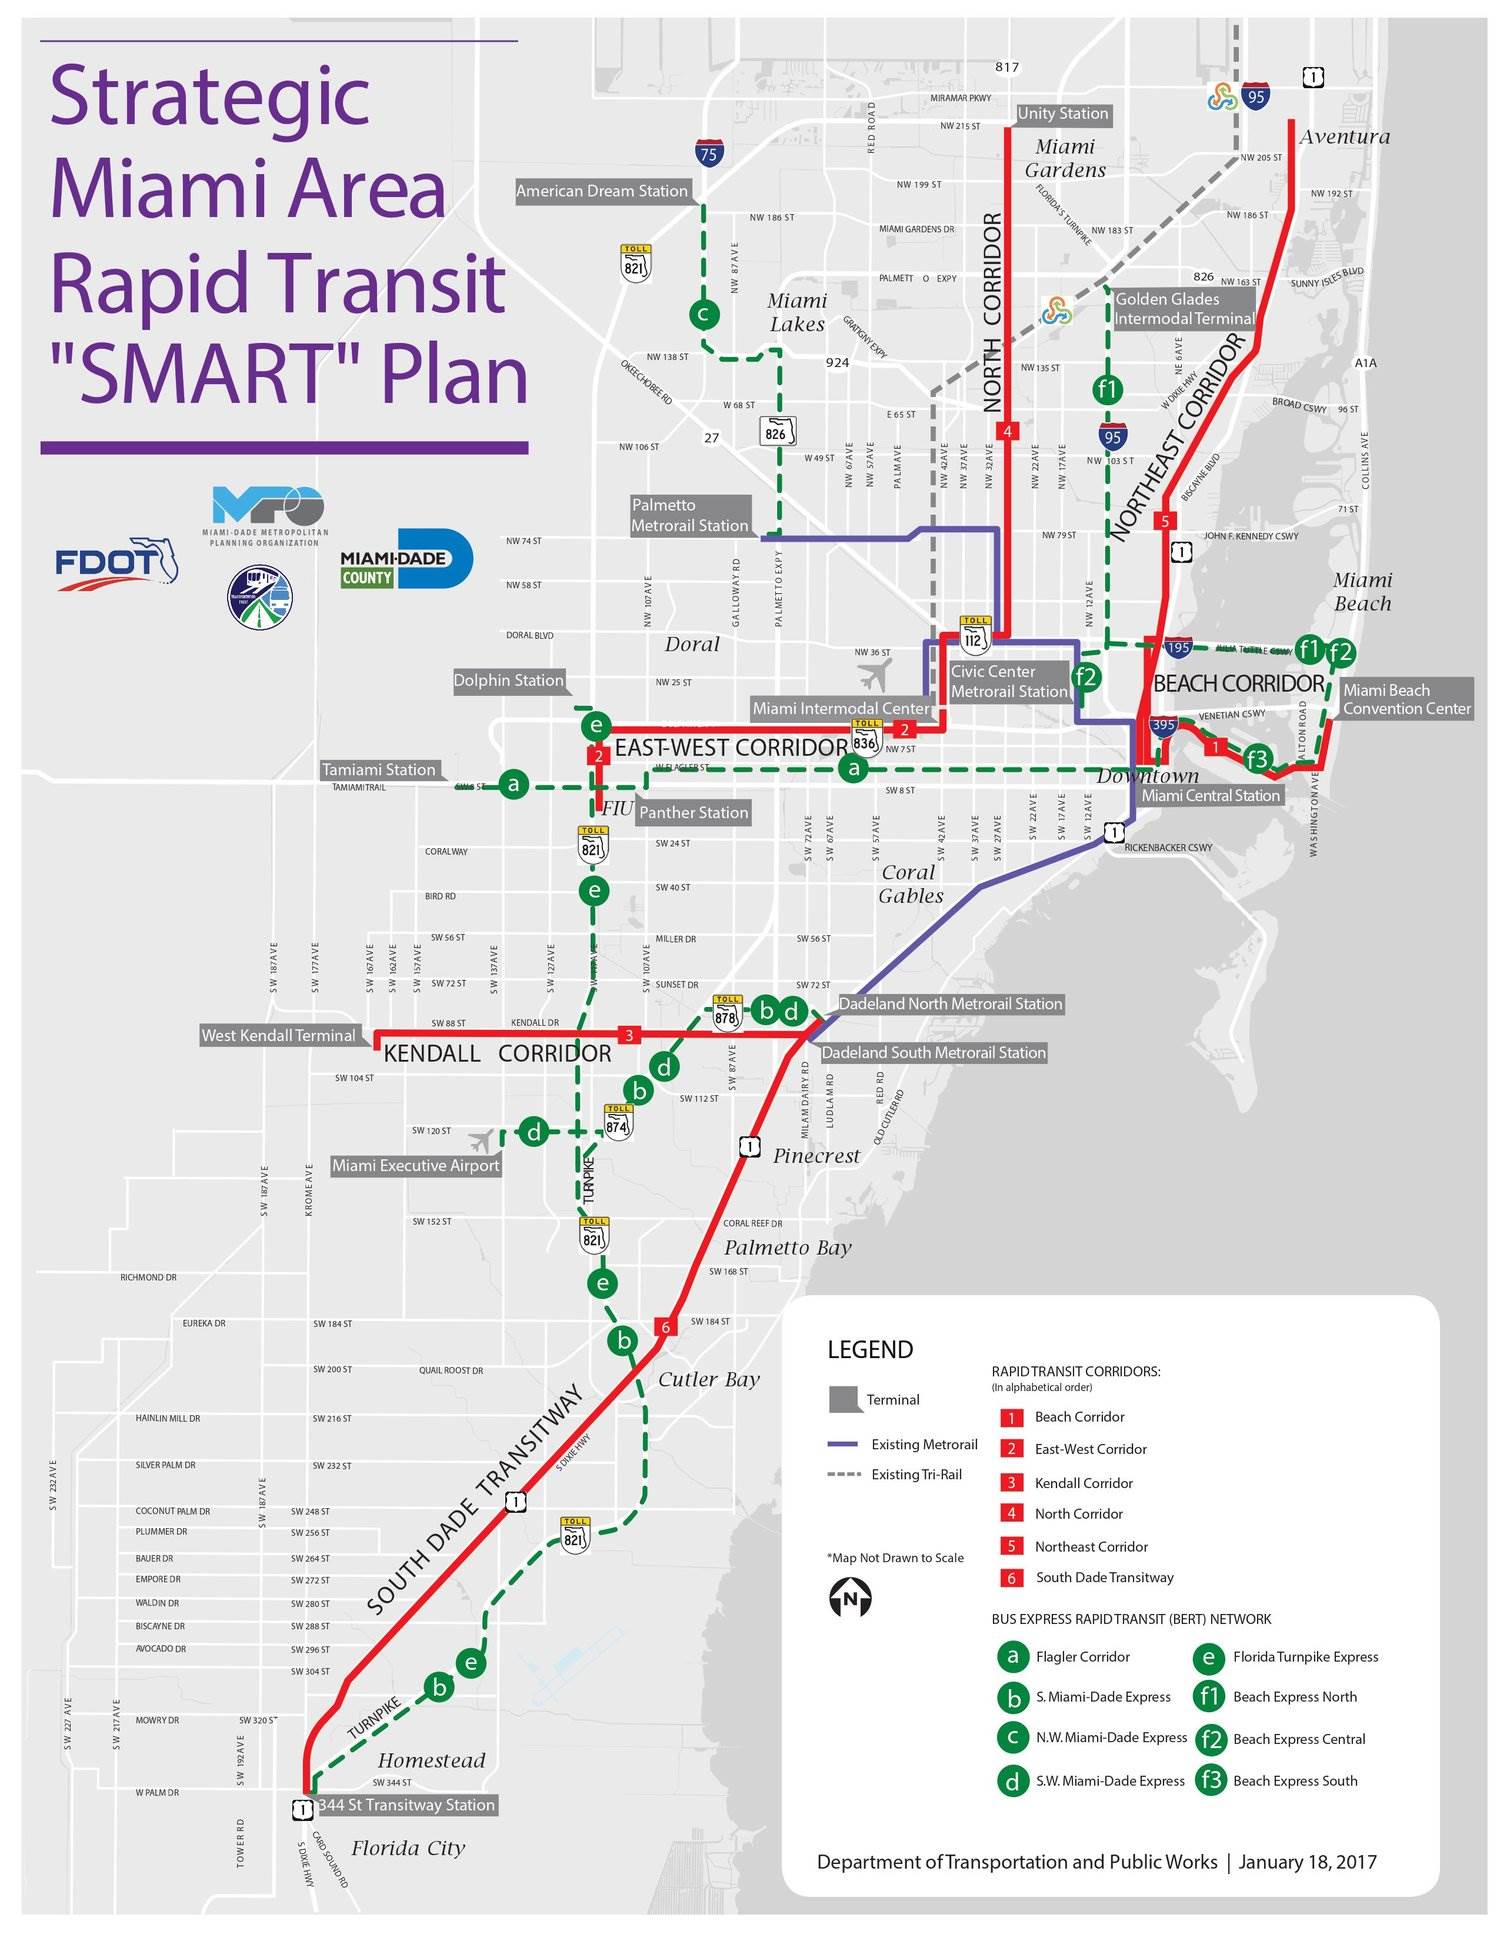 Strategic Miami Area Rapid Transit "SMART" Plan